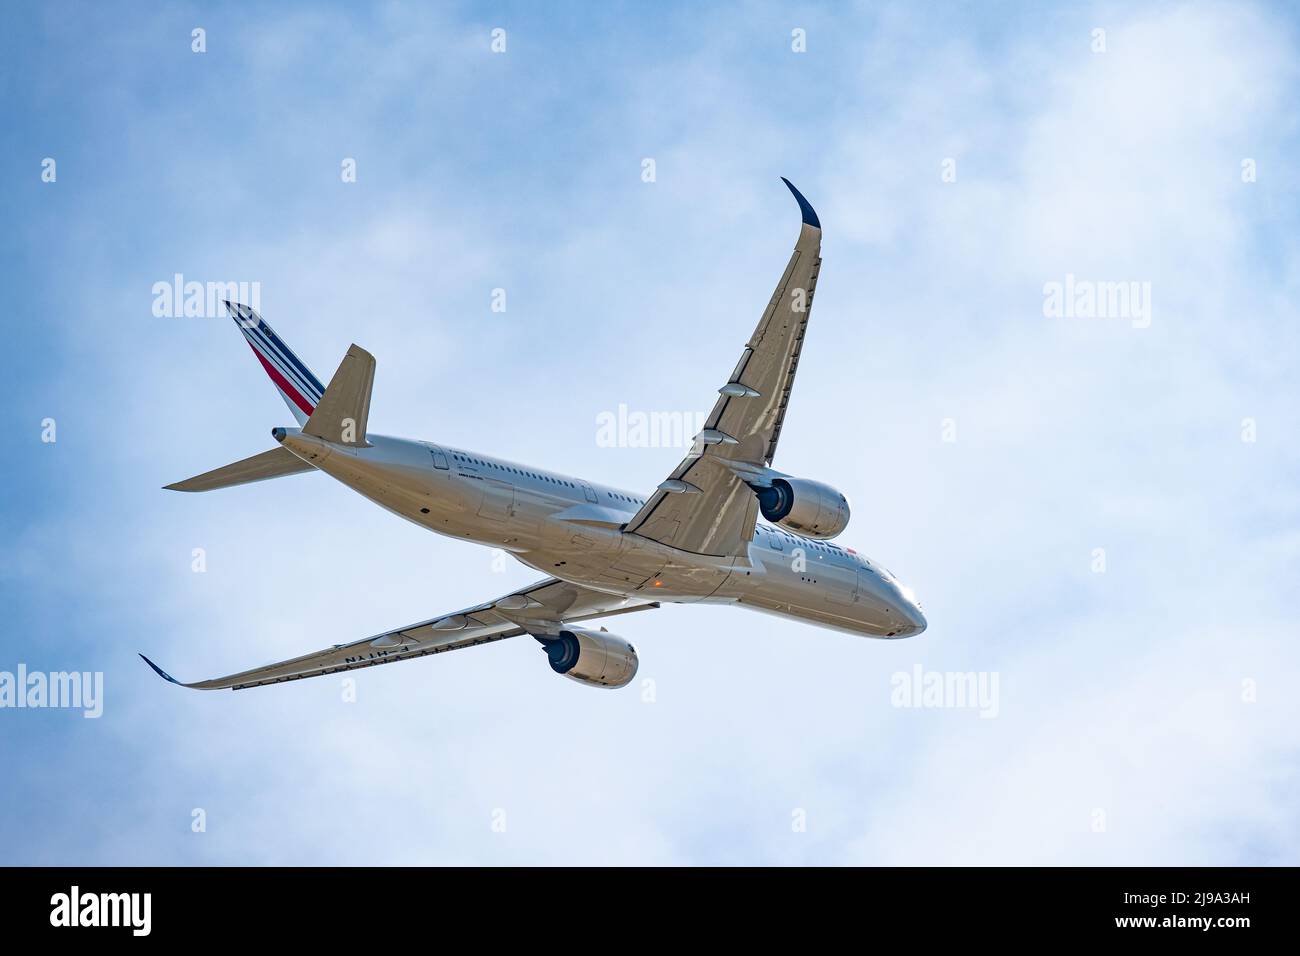 Air France passenger jet (Airbus A350-941) departing Hartsfield Jackson Atlanta International Airport for Paris Charles de Gaulle Airport in France. Stock Photo